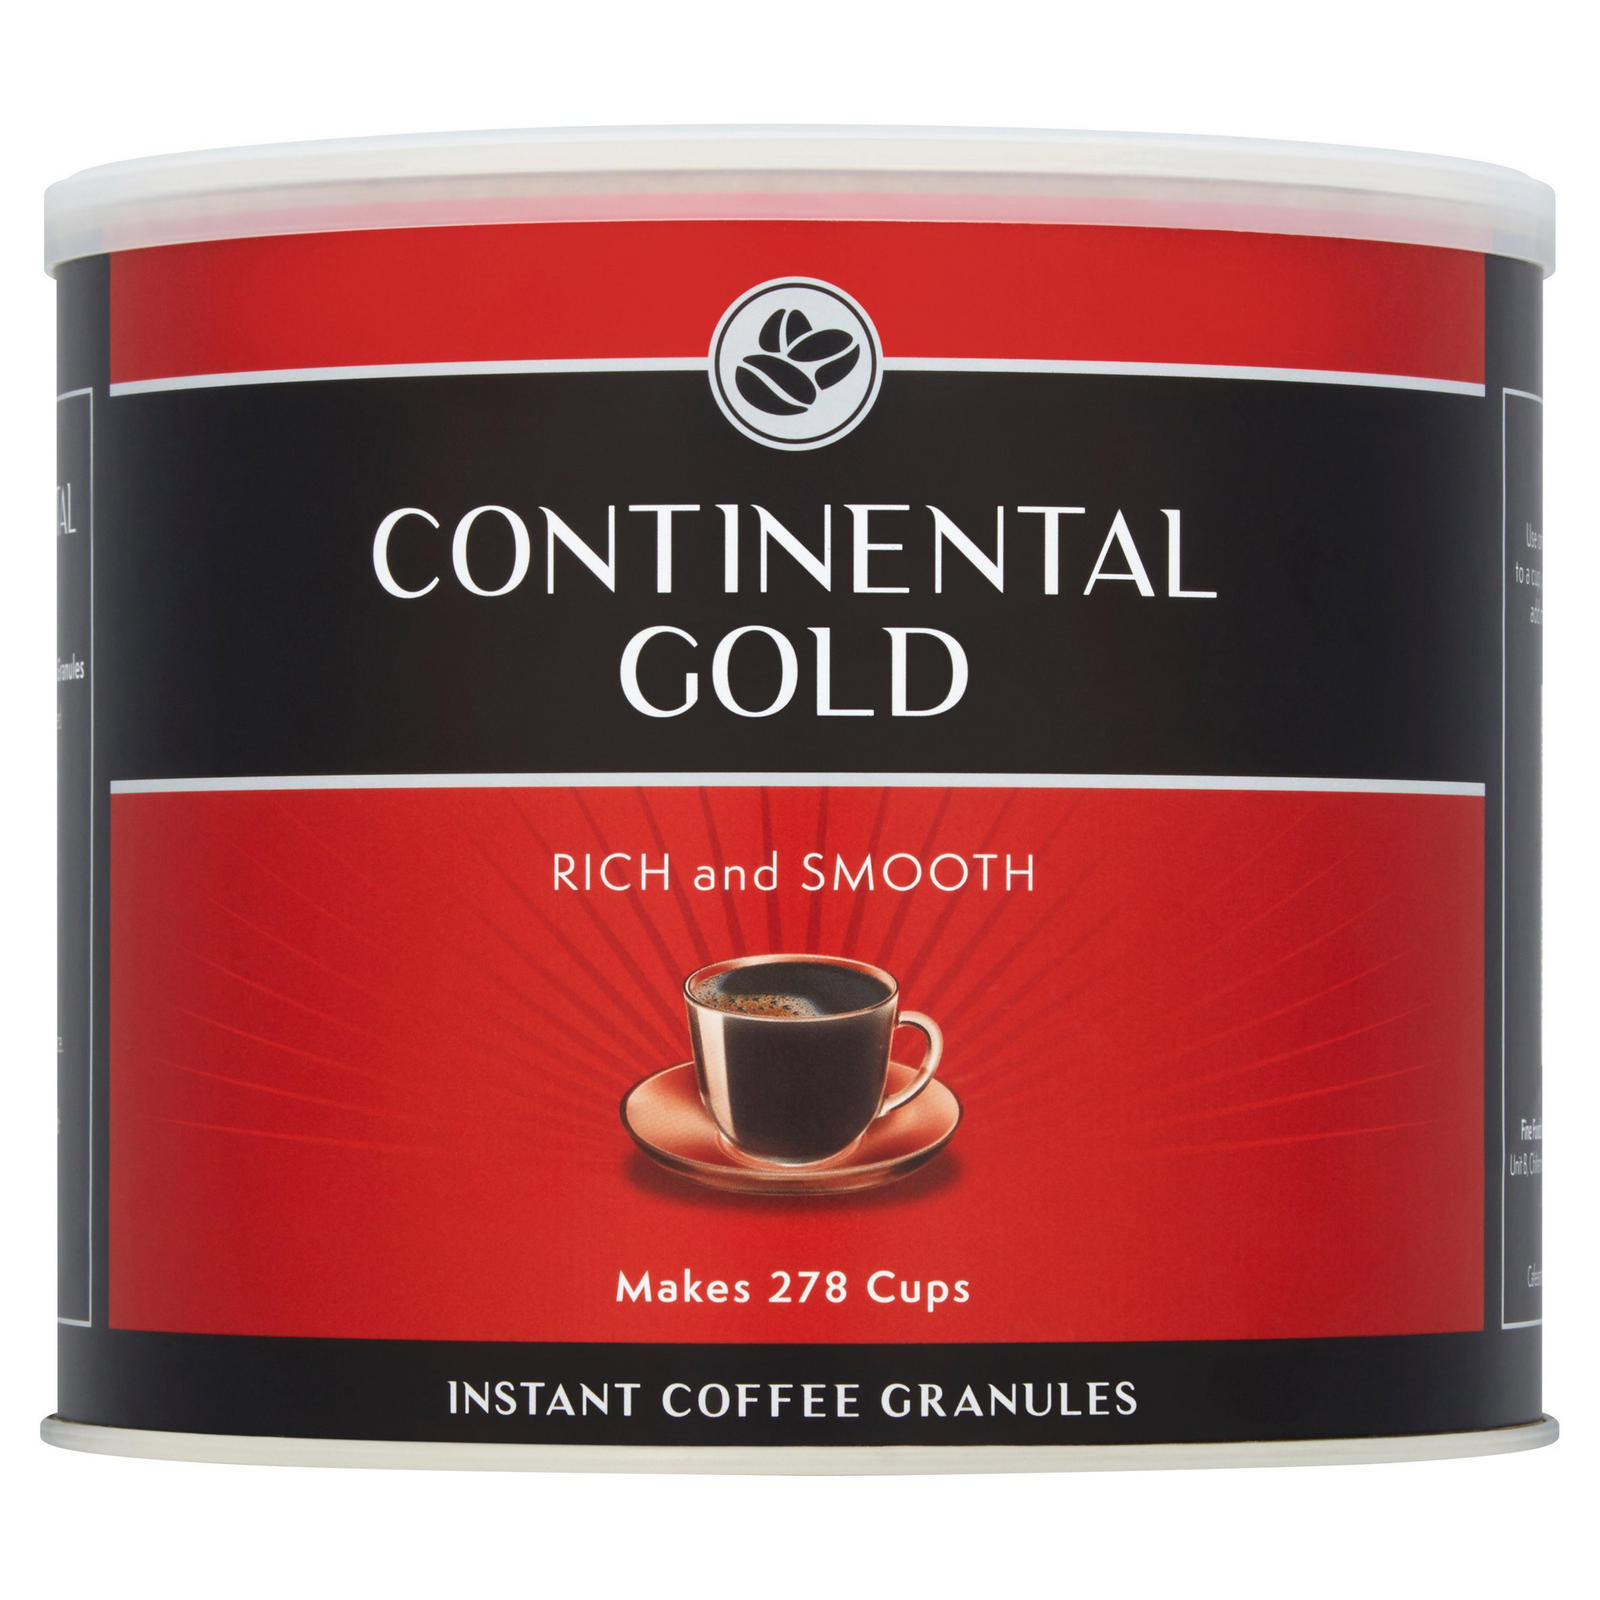 Кофе 500 рублей. Кофе Continental. Кофе Континенталь Голд. Кофе Континенталь Голд крышка.